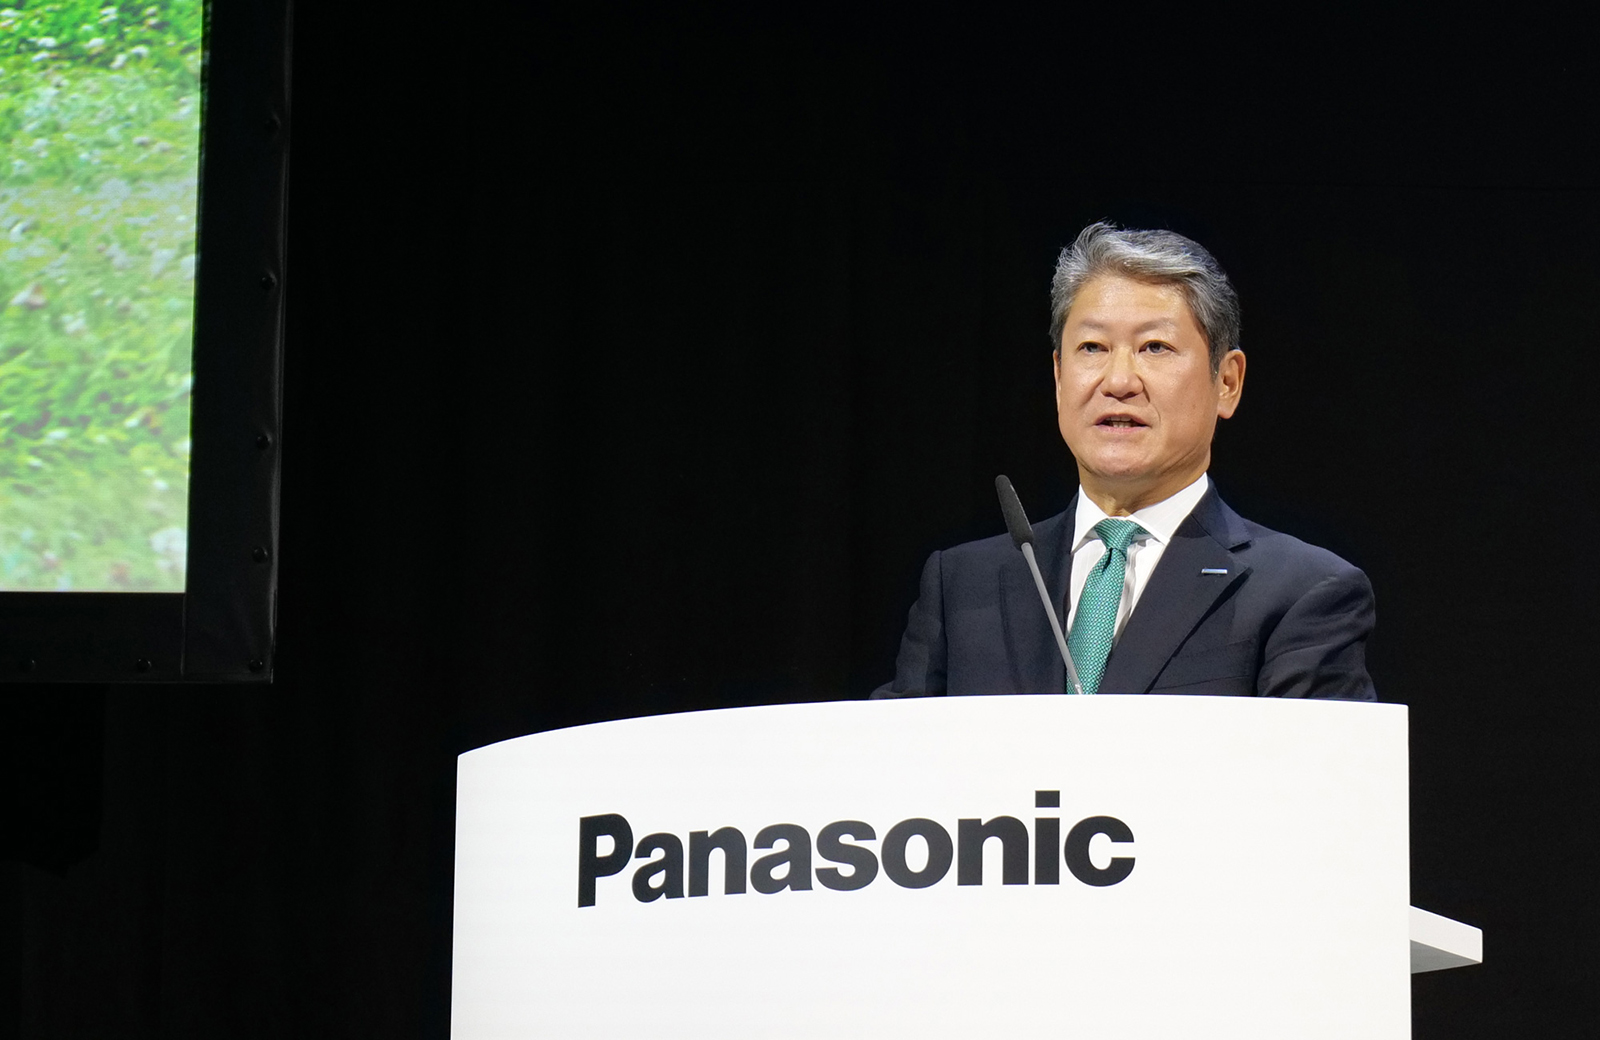 Photo: Panasonic Corporation president and CEO Masahiro Shinada at the Panasonic booth opening ceremony